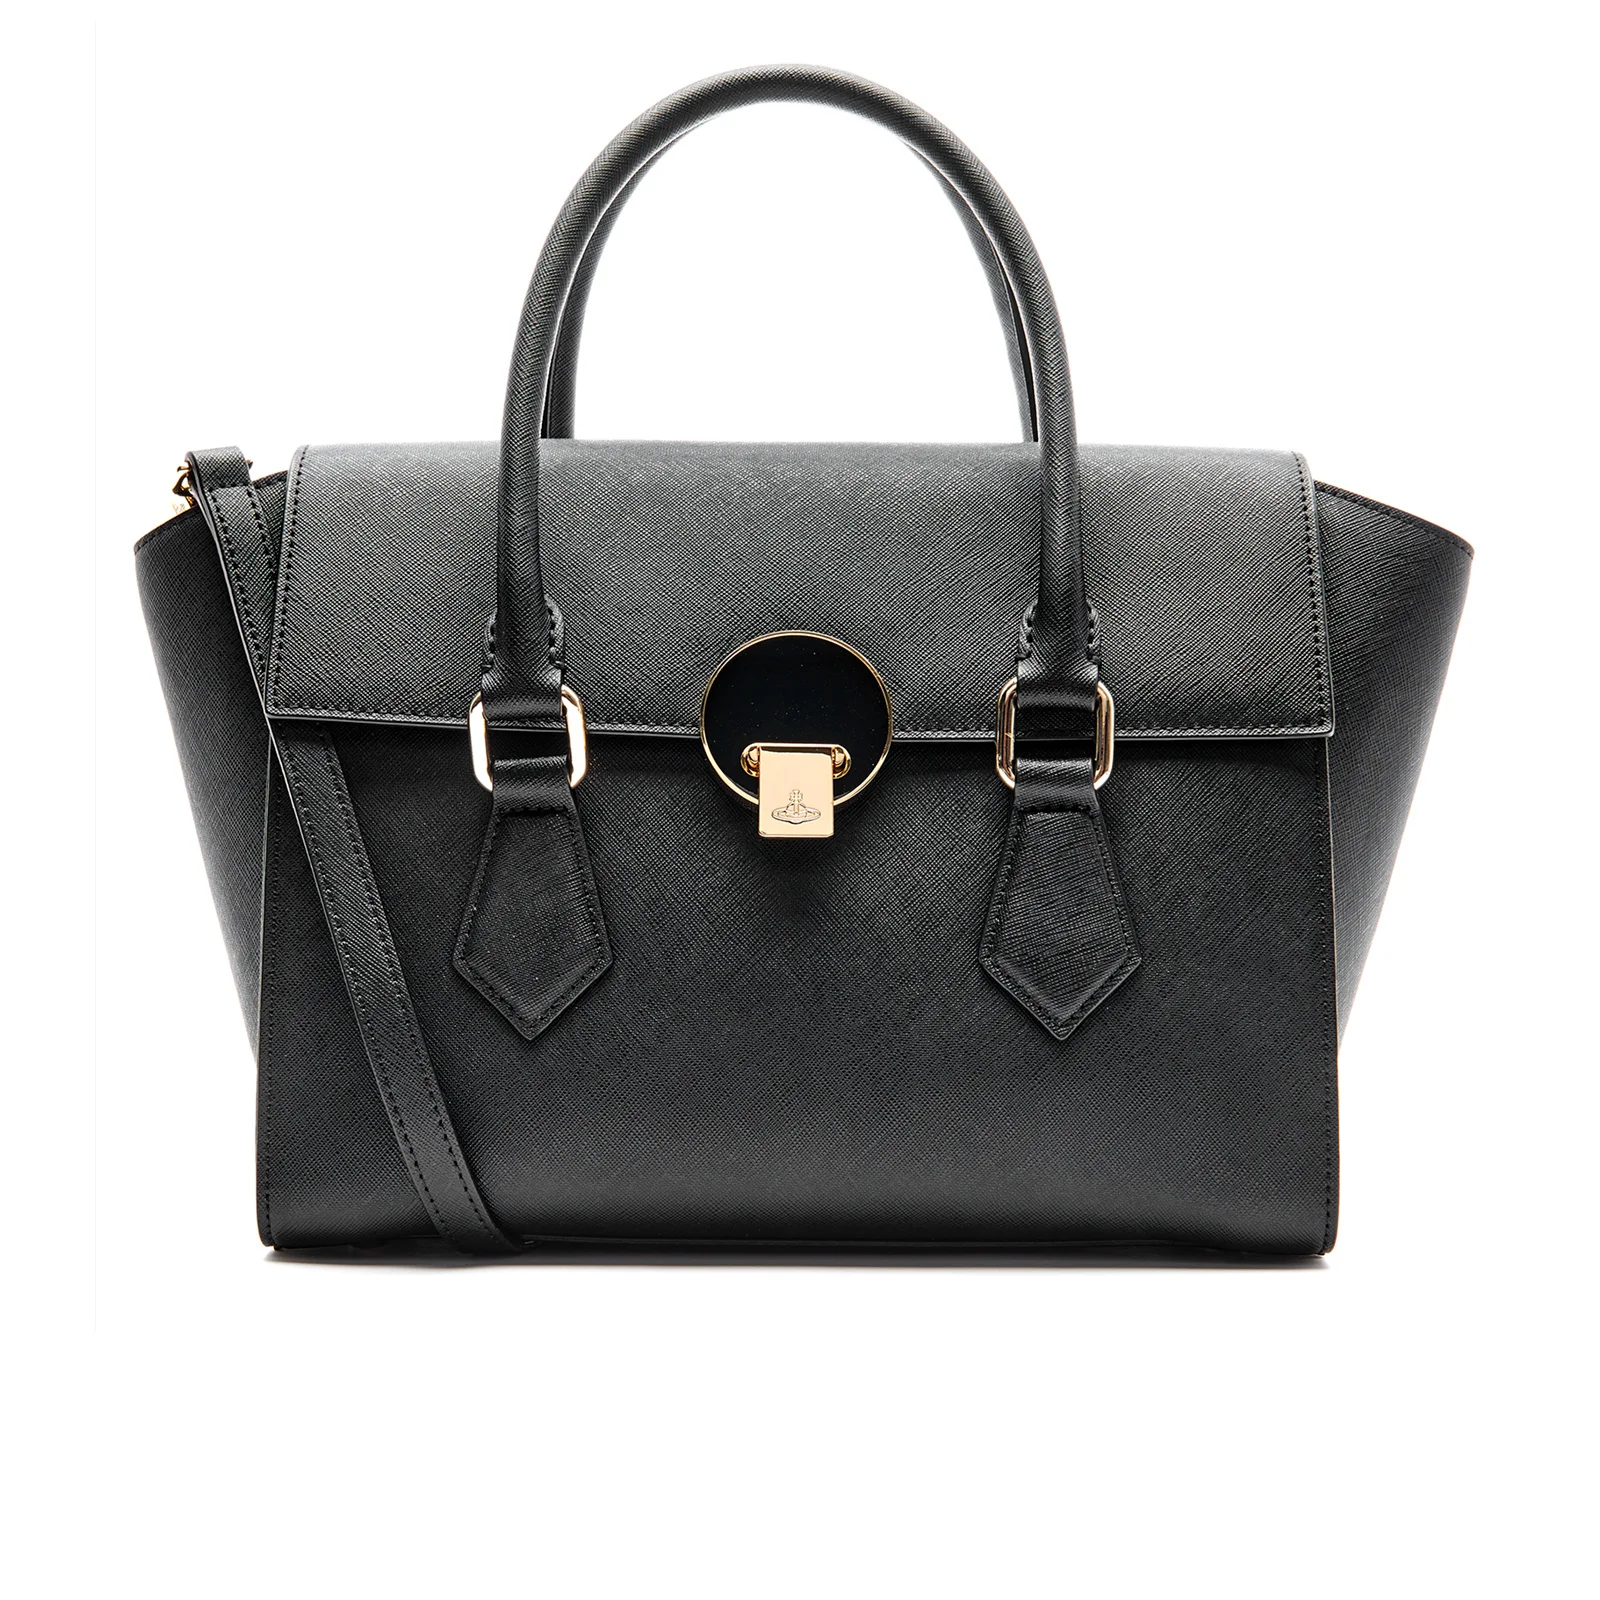 Vivienne Westwood Women's Opio Saffiano Leather Handbag - Black Image 1